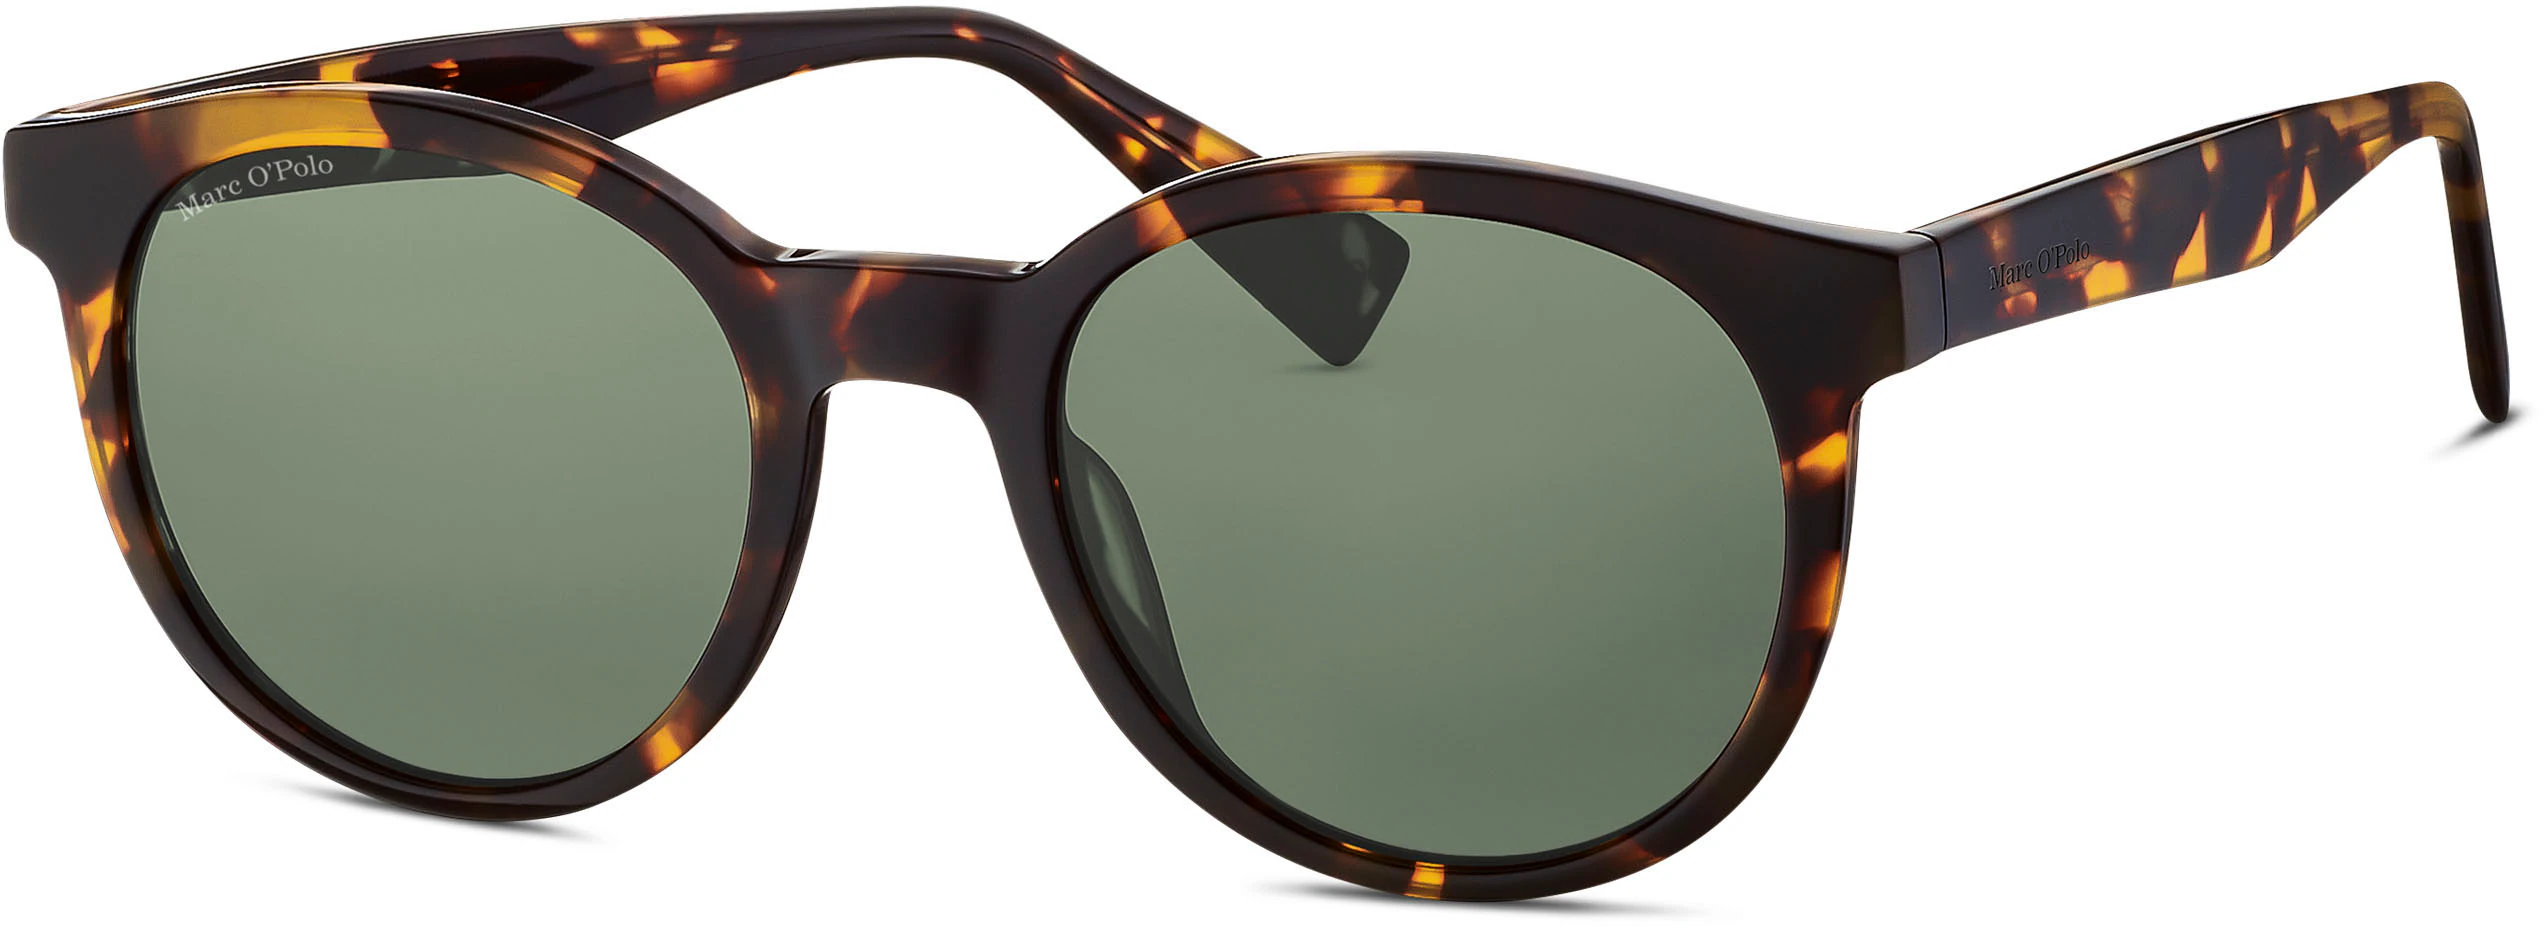 Marc OPolo Sonnenbrille "Modell 506185", Panto-Form günstig online kaufen